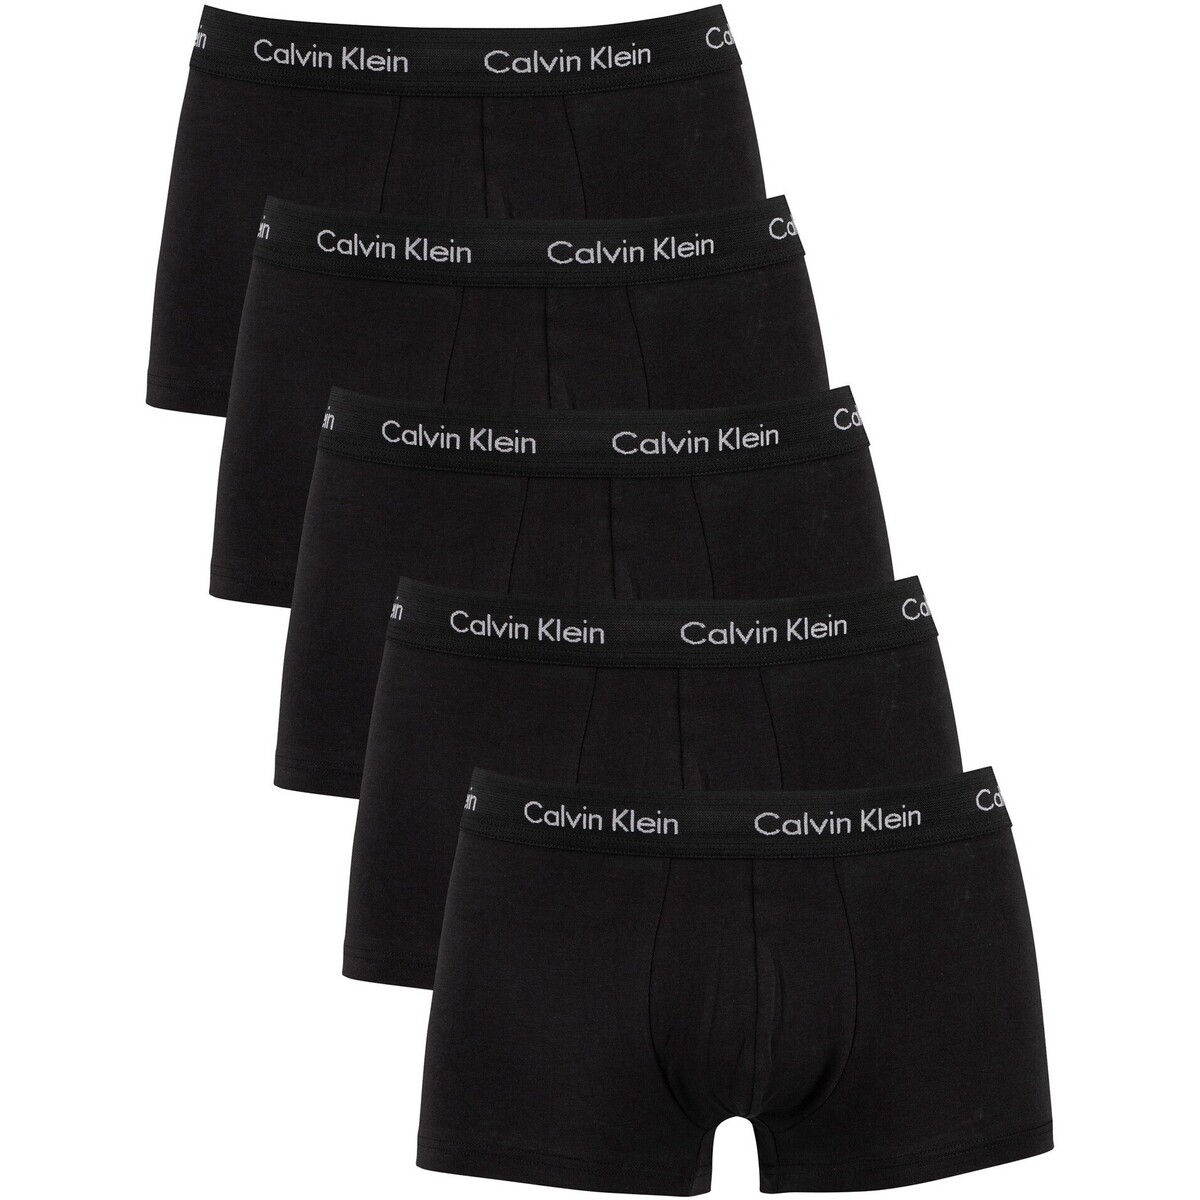 Ropa interior Hombre Calzoncillos Calvin Klein Jeans Paquete De 5 Troncos De Baja Altura Negro